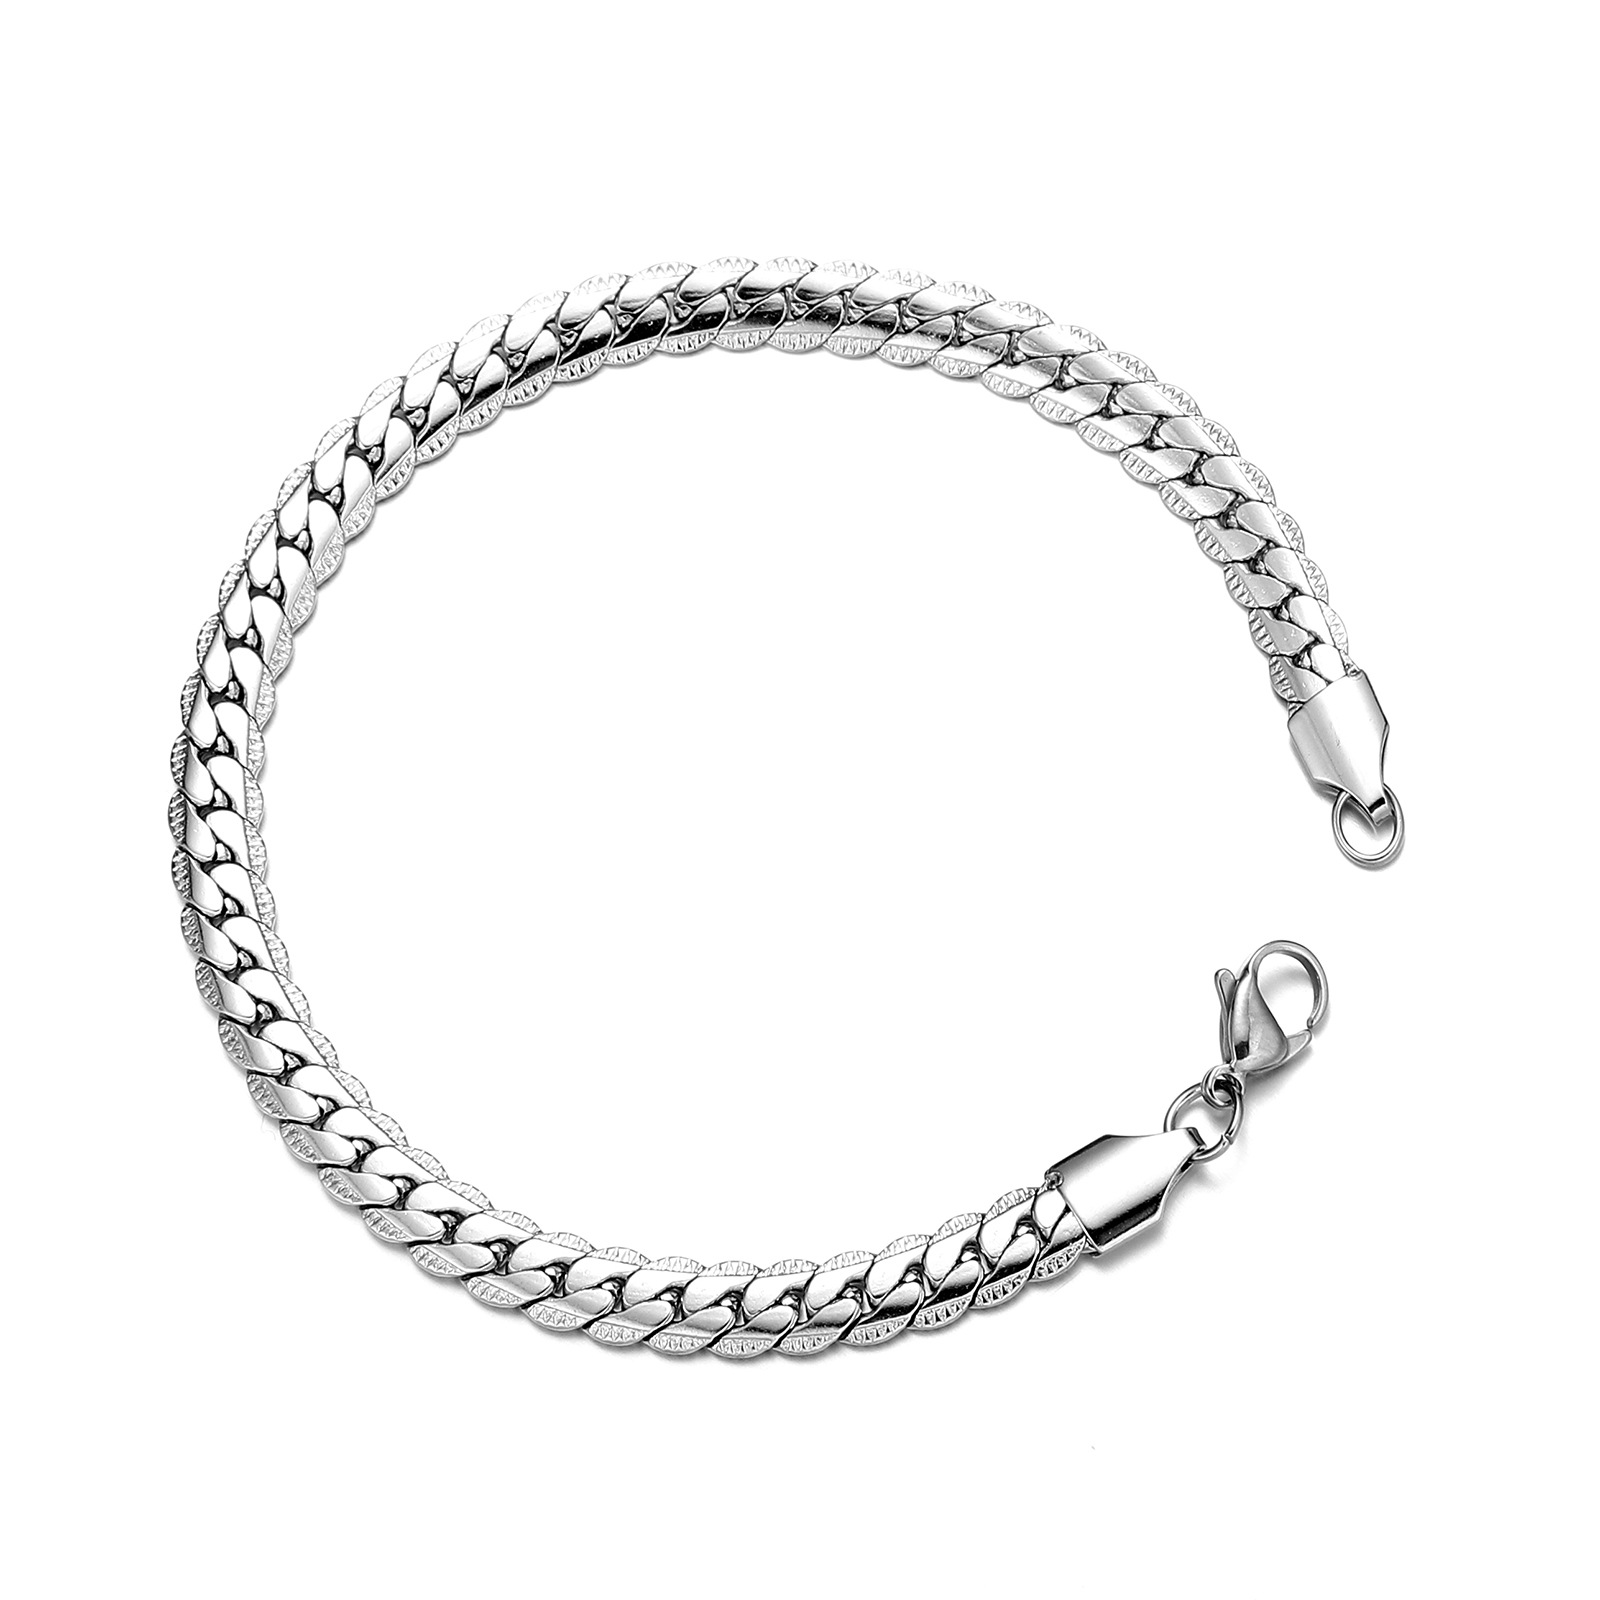 Silver bracelet (21cm long)